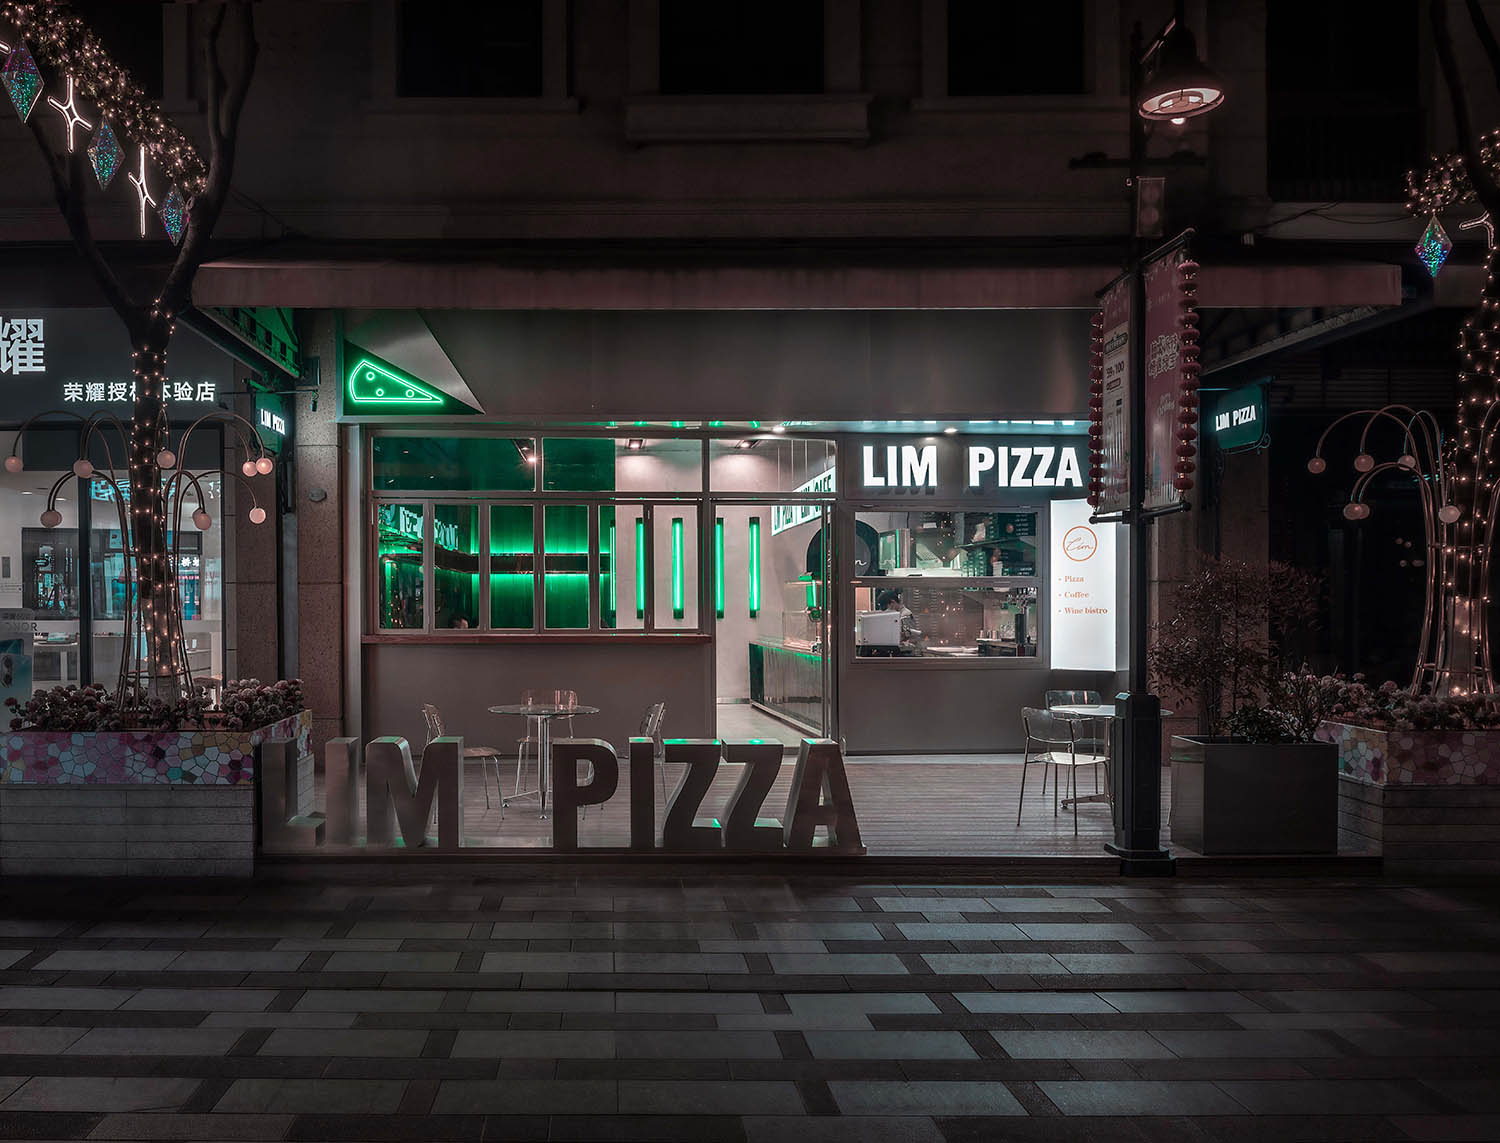 LIM PIZZA店,苏州披萨店设计,餐厅设计,网红披萨店设计,披萨店设计案例,PIZZA店设计,苏州网红店设计,平介设计,Parallect-design